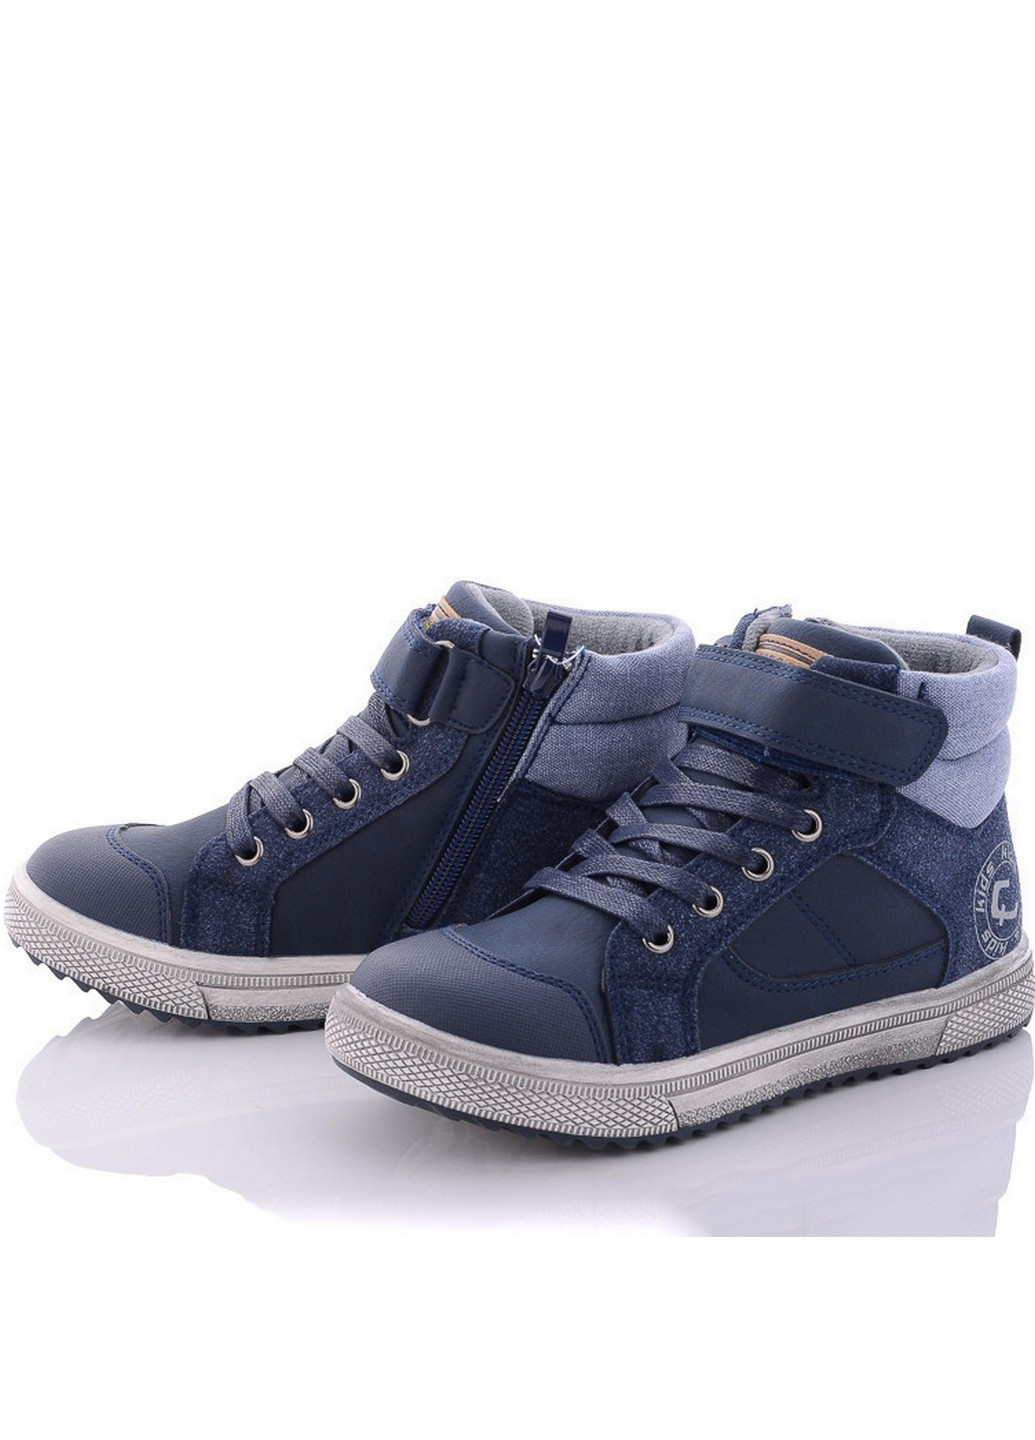 Синие кэжуал осенние демисезонные ботинки q372-1 37 синий С.Луч